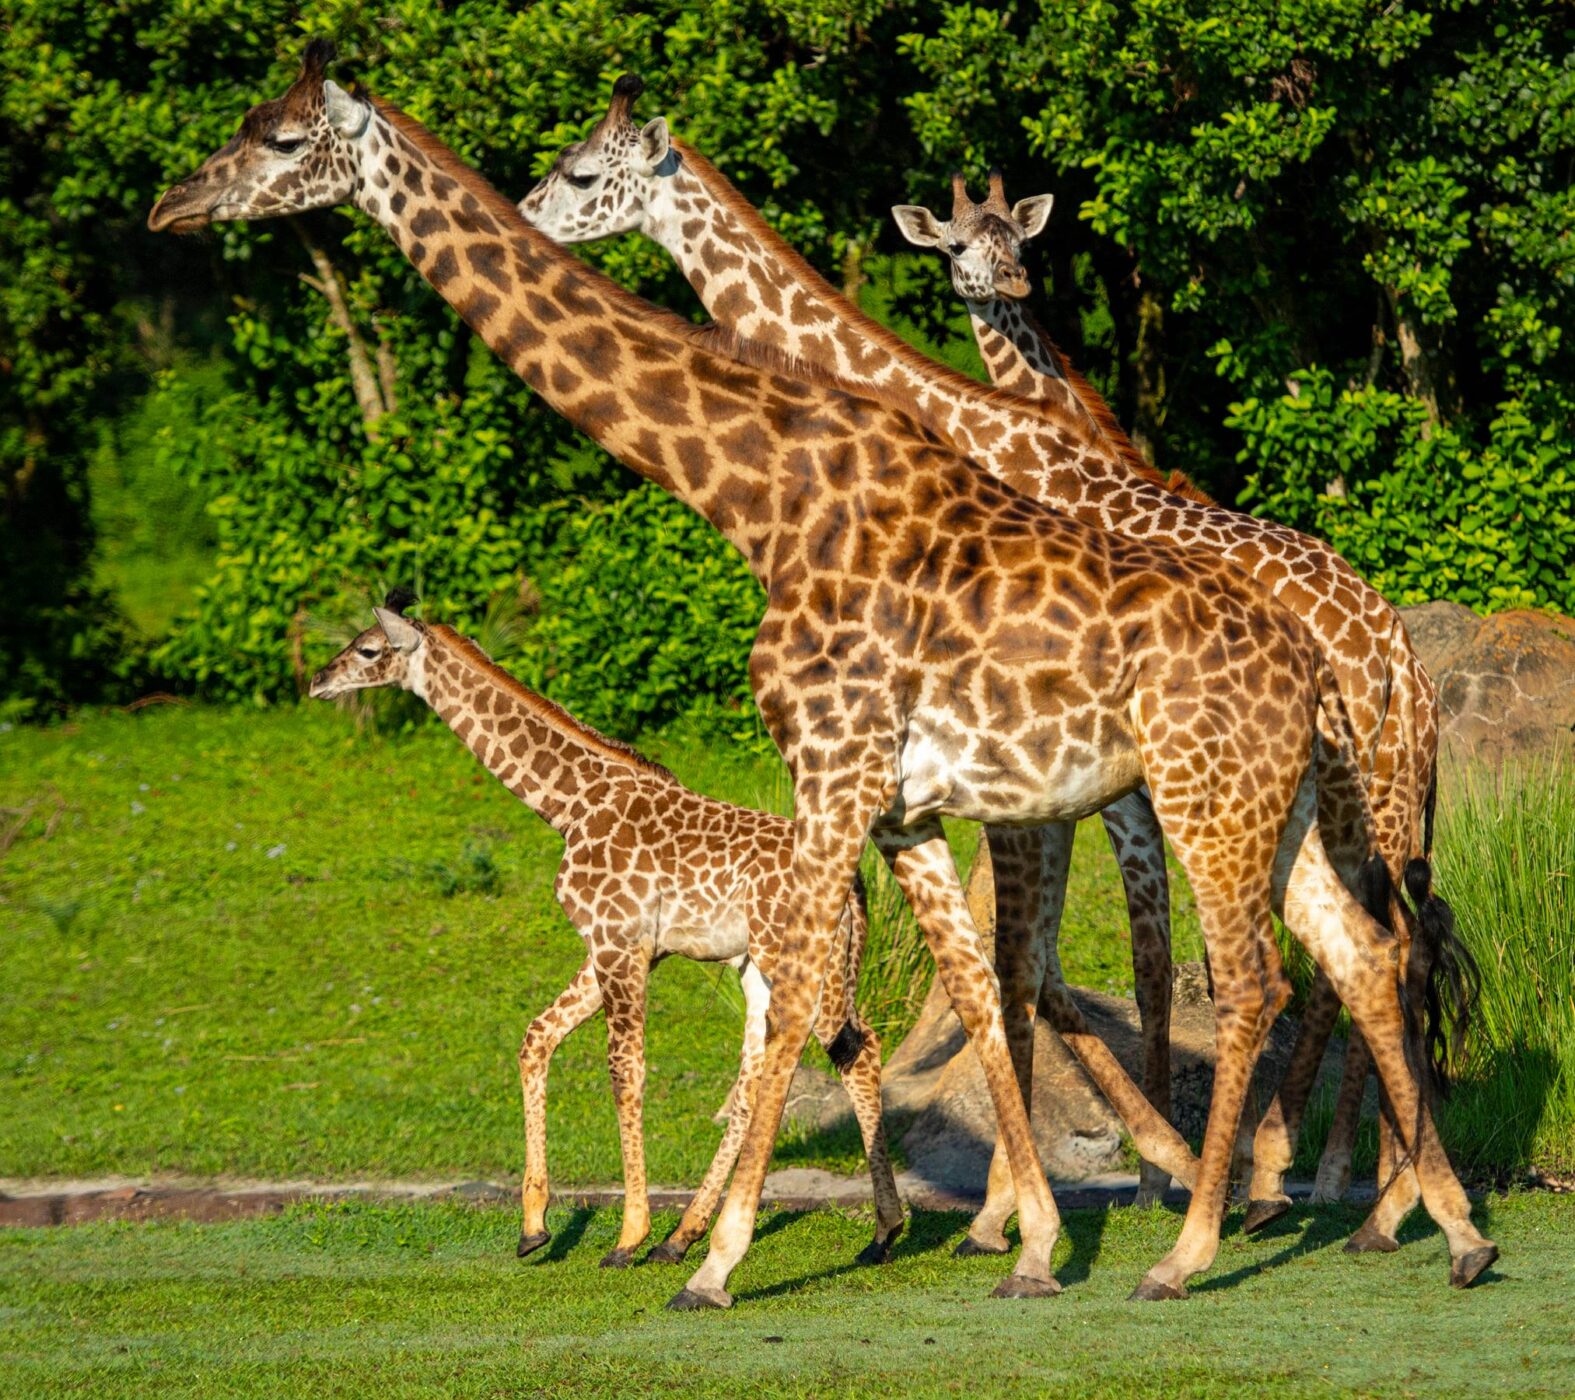 Meet Humphrey! Baby Giraffe Joins Tower on Kilimanjaro Safaris